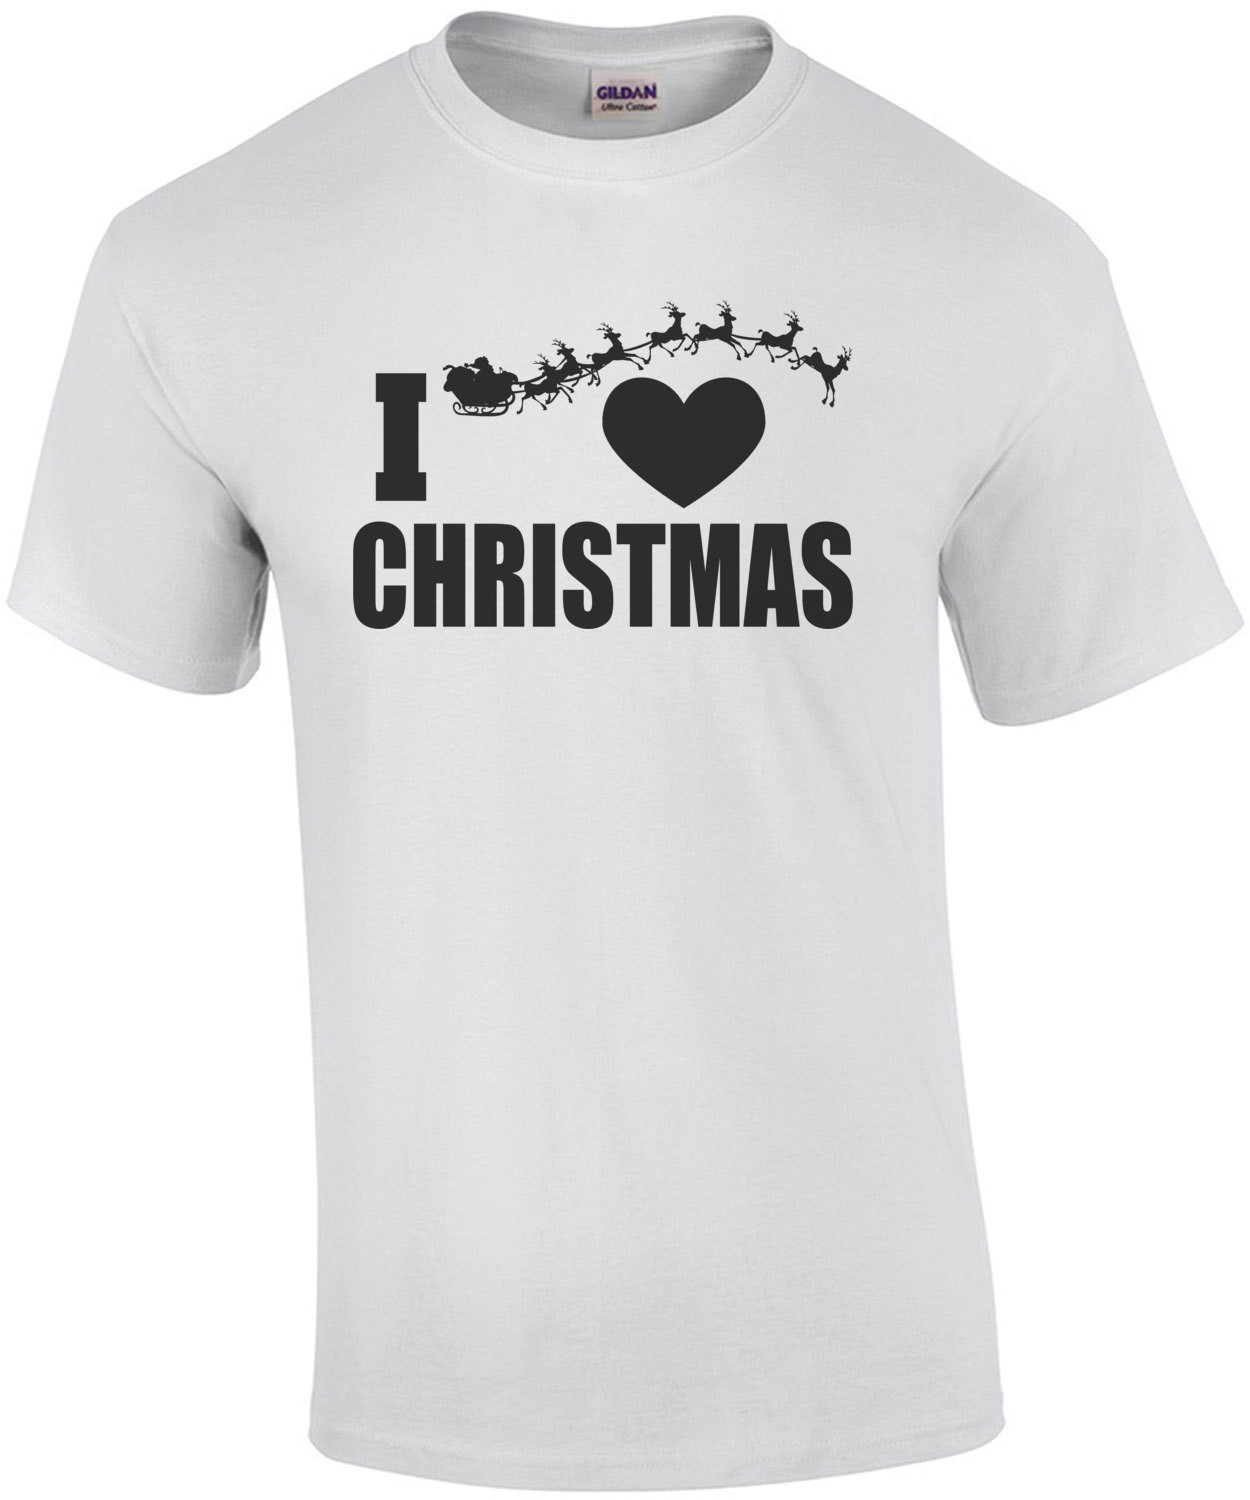 I Heart Christmas T-Shirt